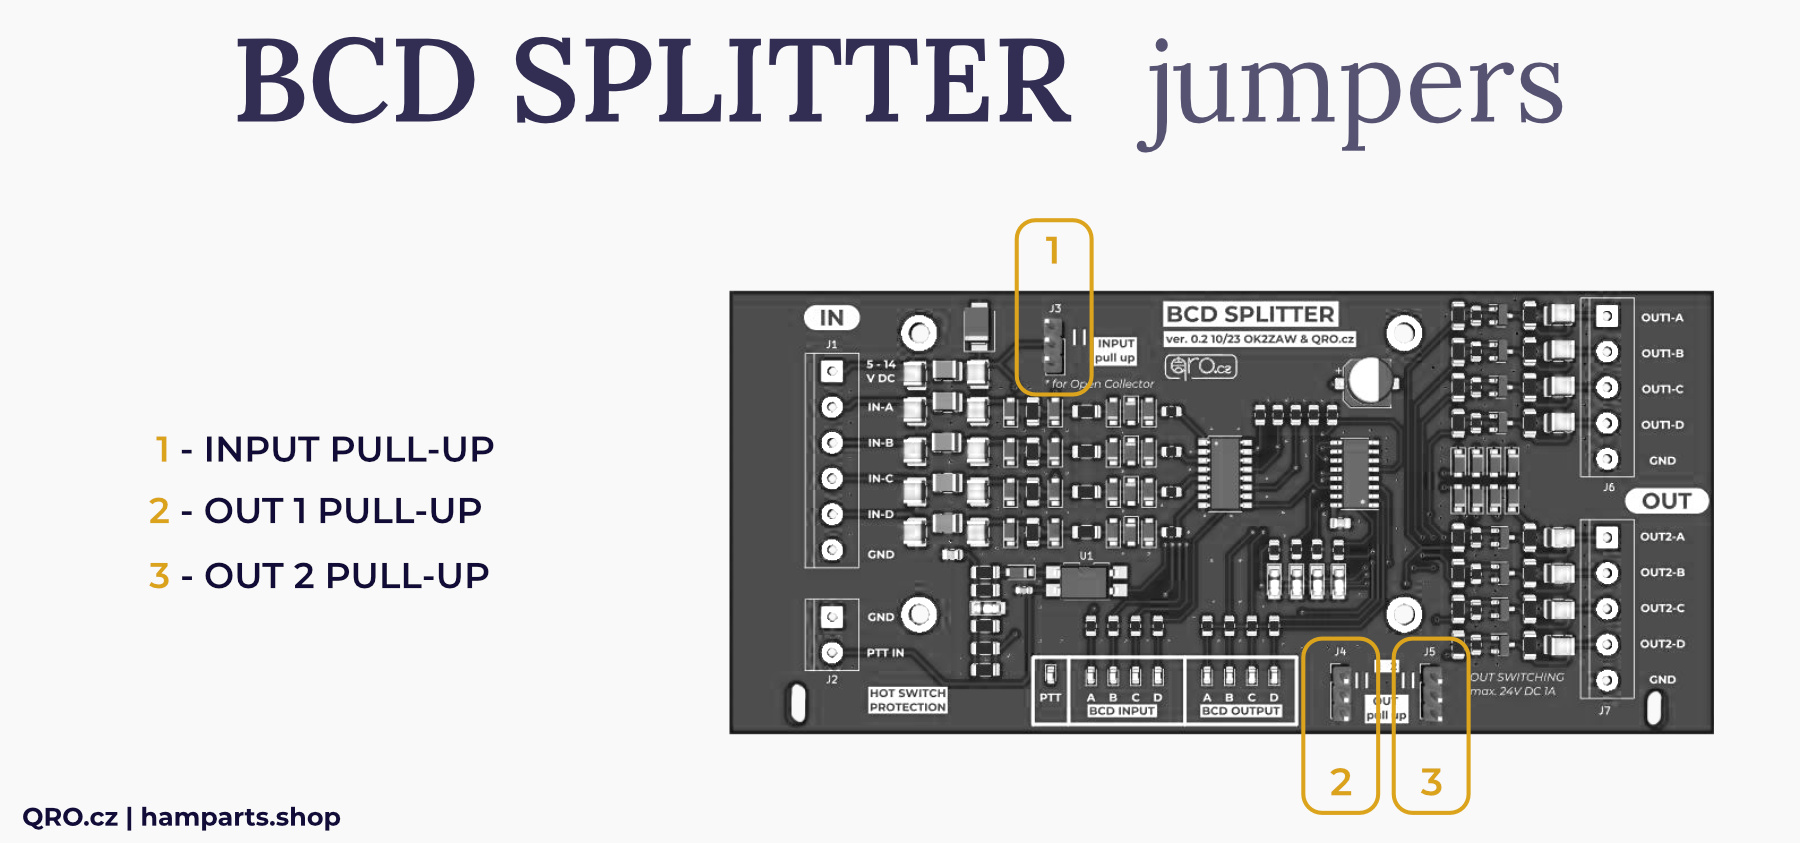 bcd splitter jumper by qro.cz hamparts.shop